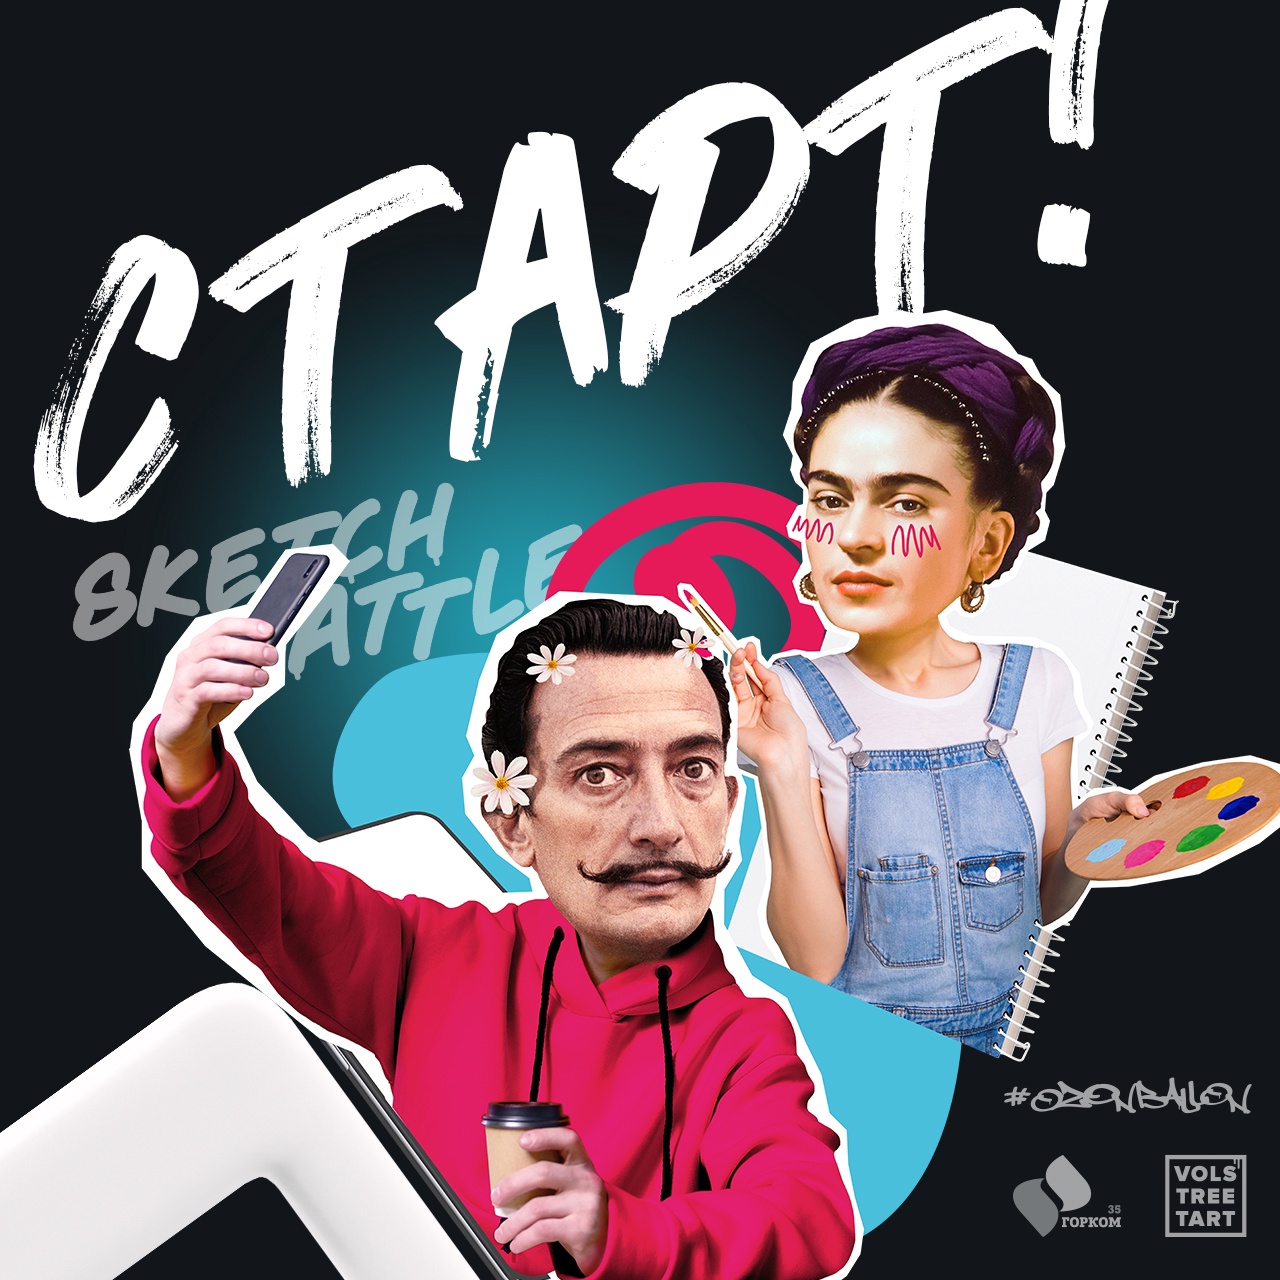 Промо-акция Ozon.ru: «Скетч-баттл Ozon Ballon и ВолСтритАрт»